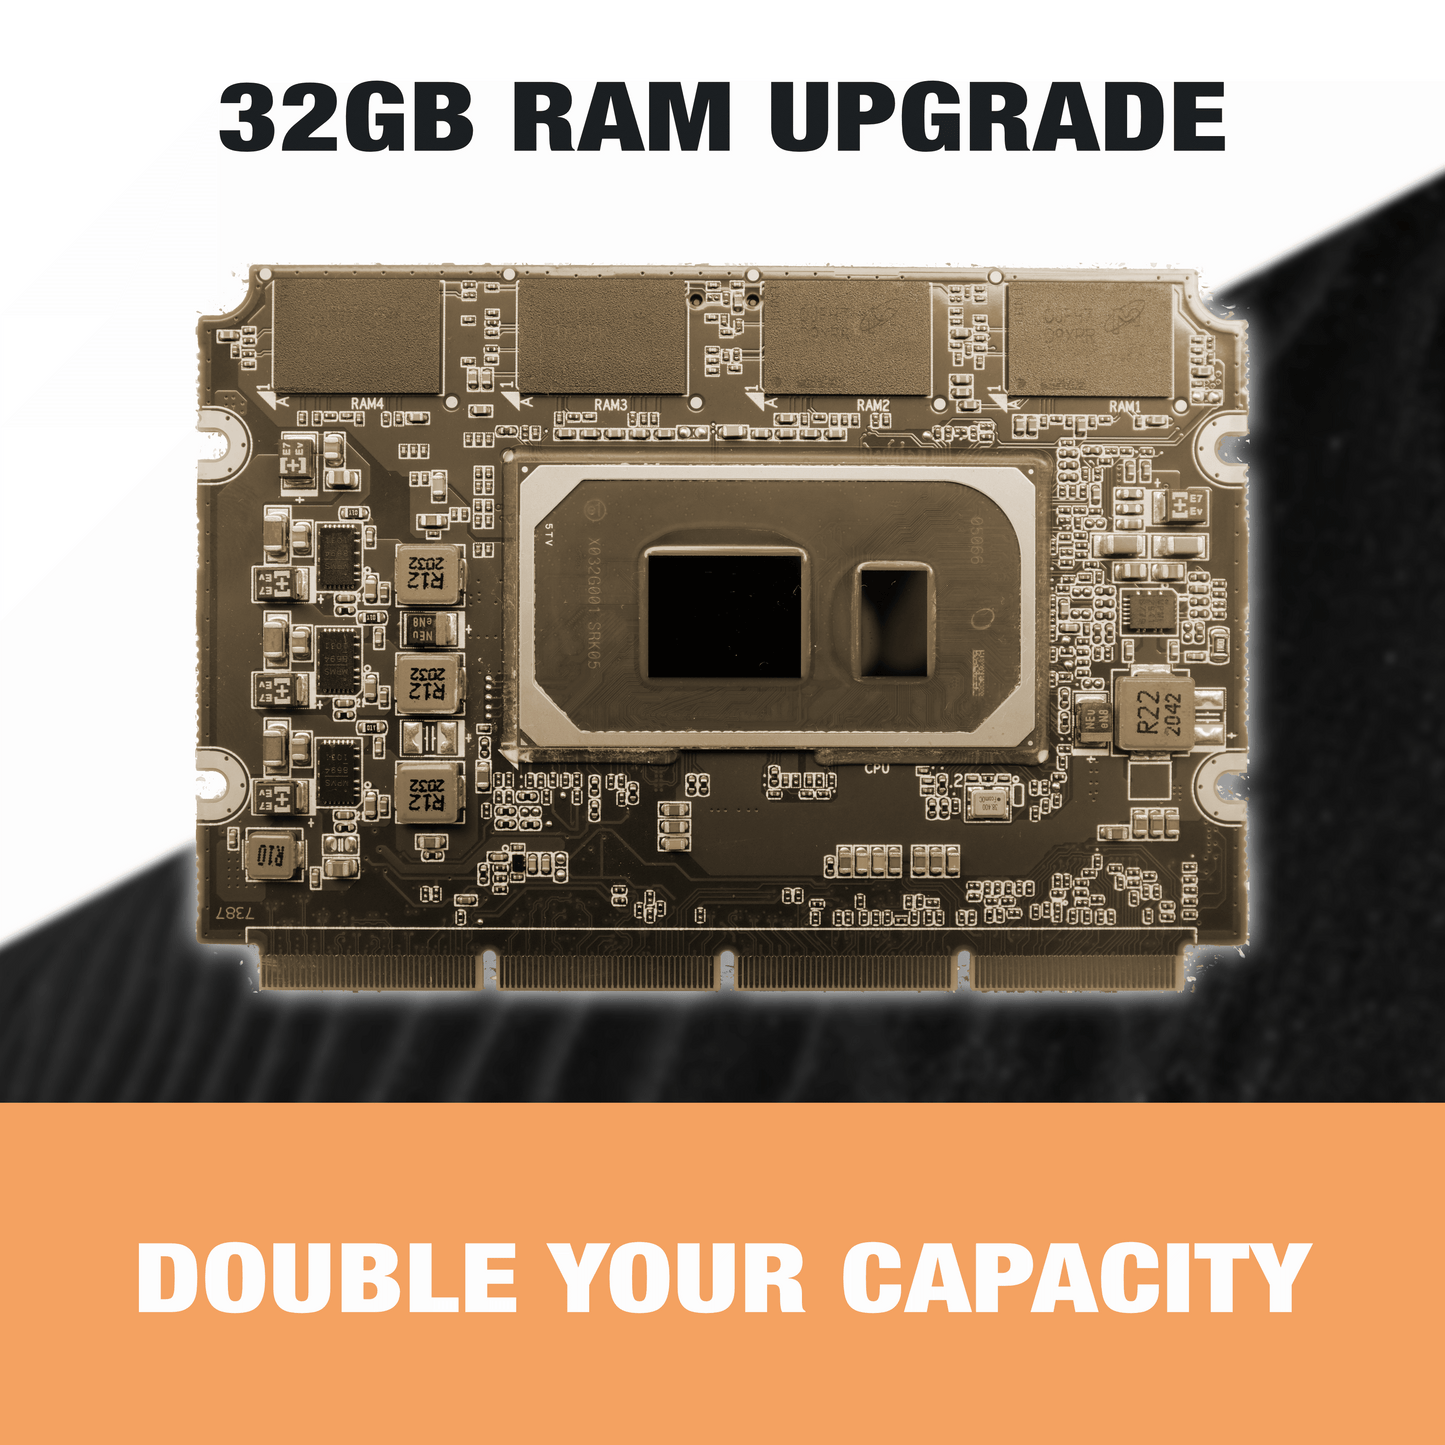 32GB RAM Upgrade (Add-on)